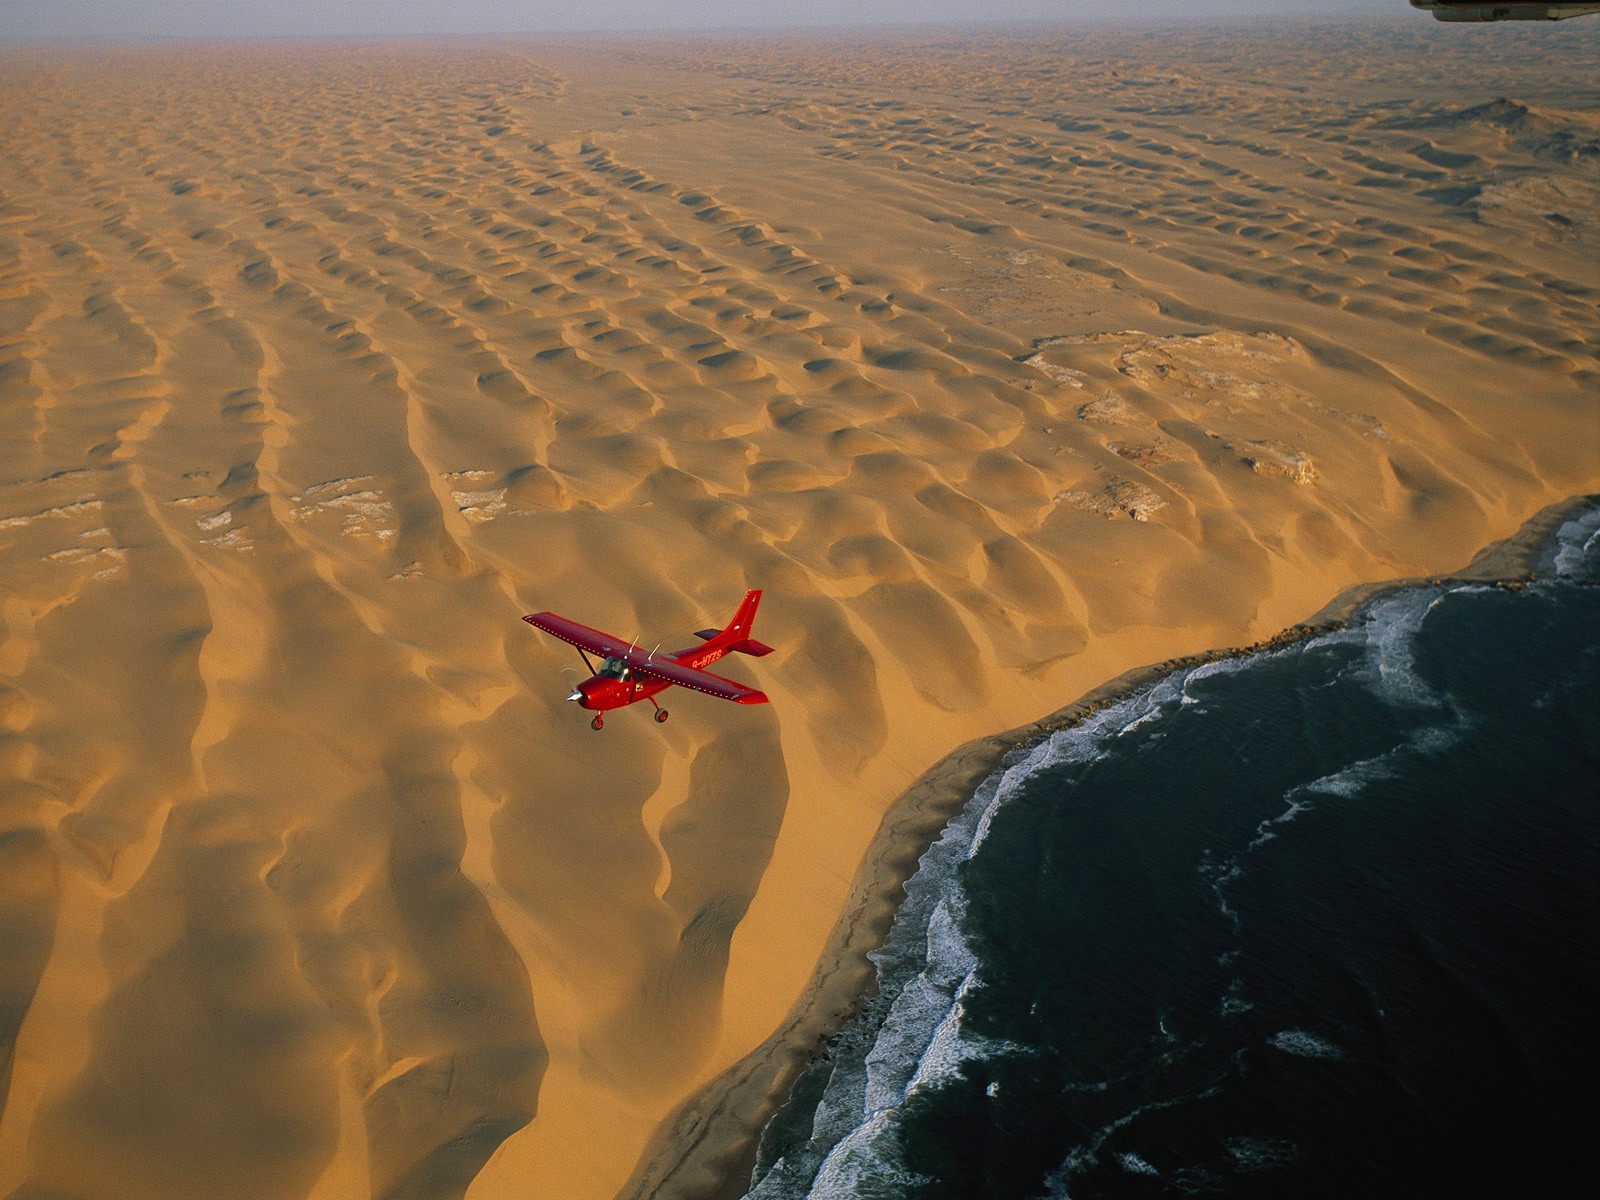 General 1600x1200 airplane aircraft aerial view dunes desert landscape vehicle